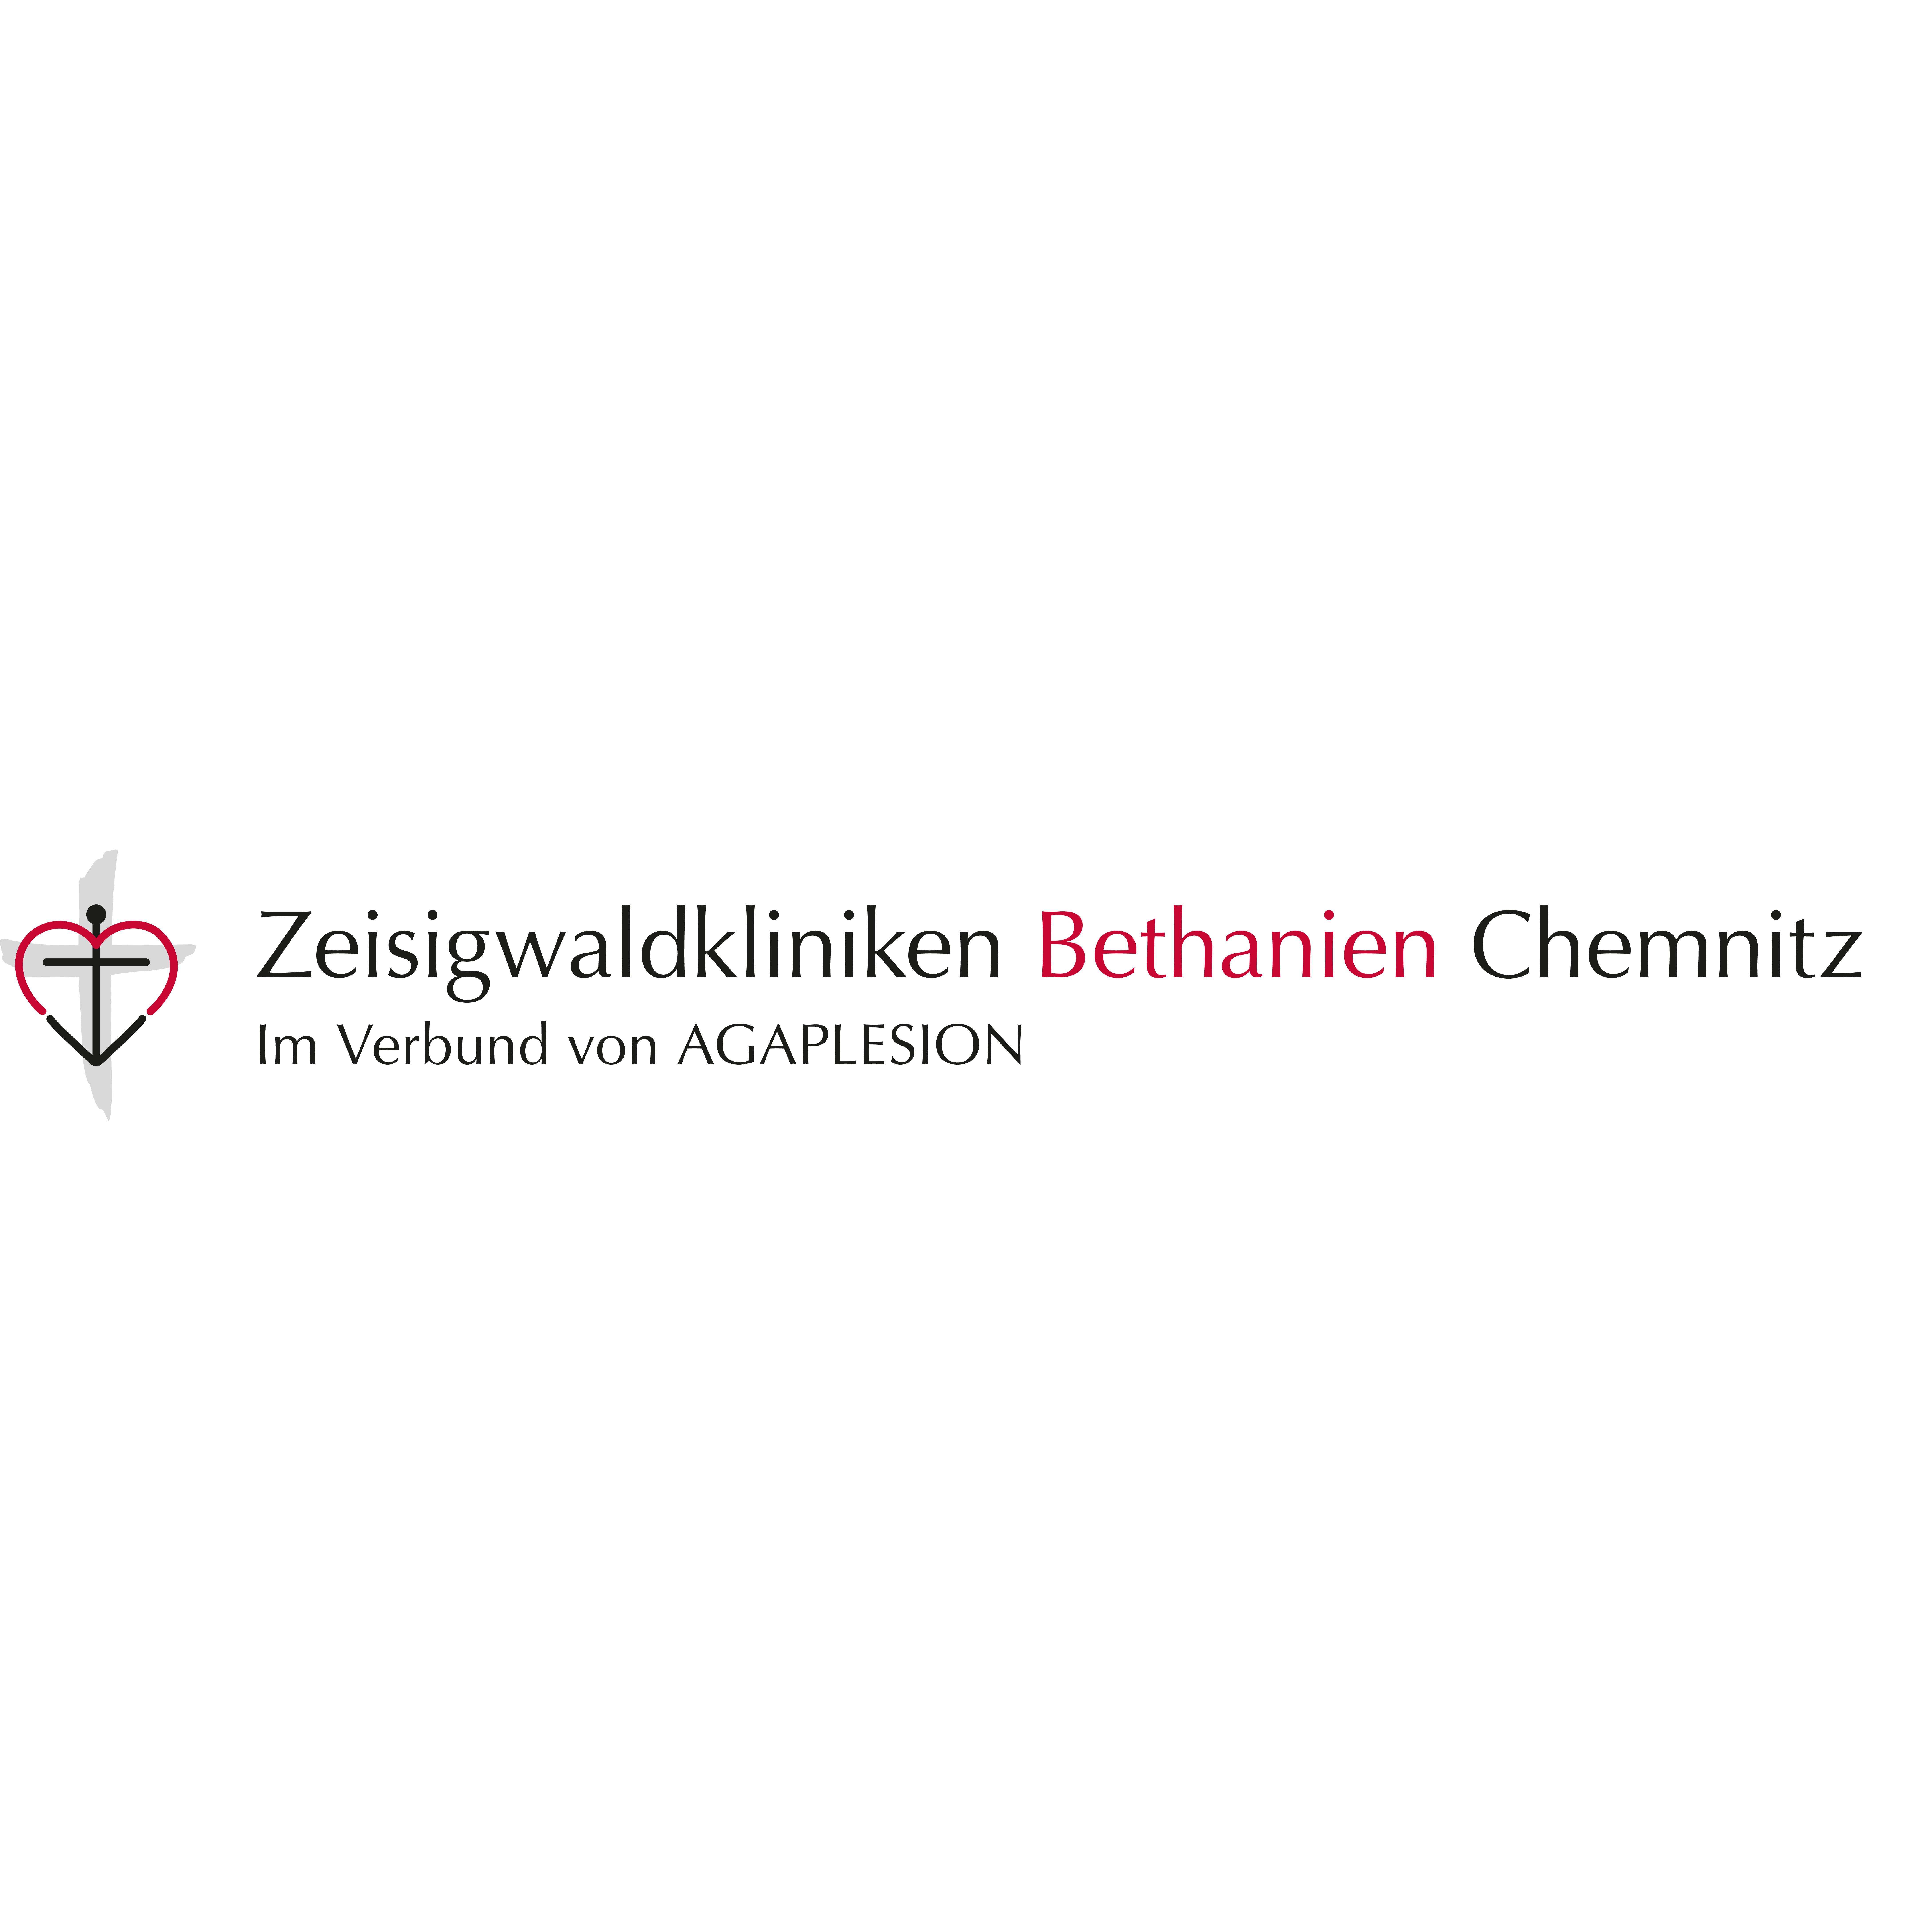 Klinik für Urologie, Zeisigwaldkliniken Bethanien Chemnitz - Medical Clinic - Chemnitz - 0371 4301701 Germany | ShowMeLocal.com